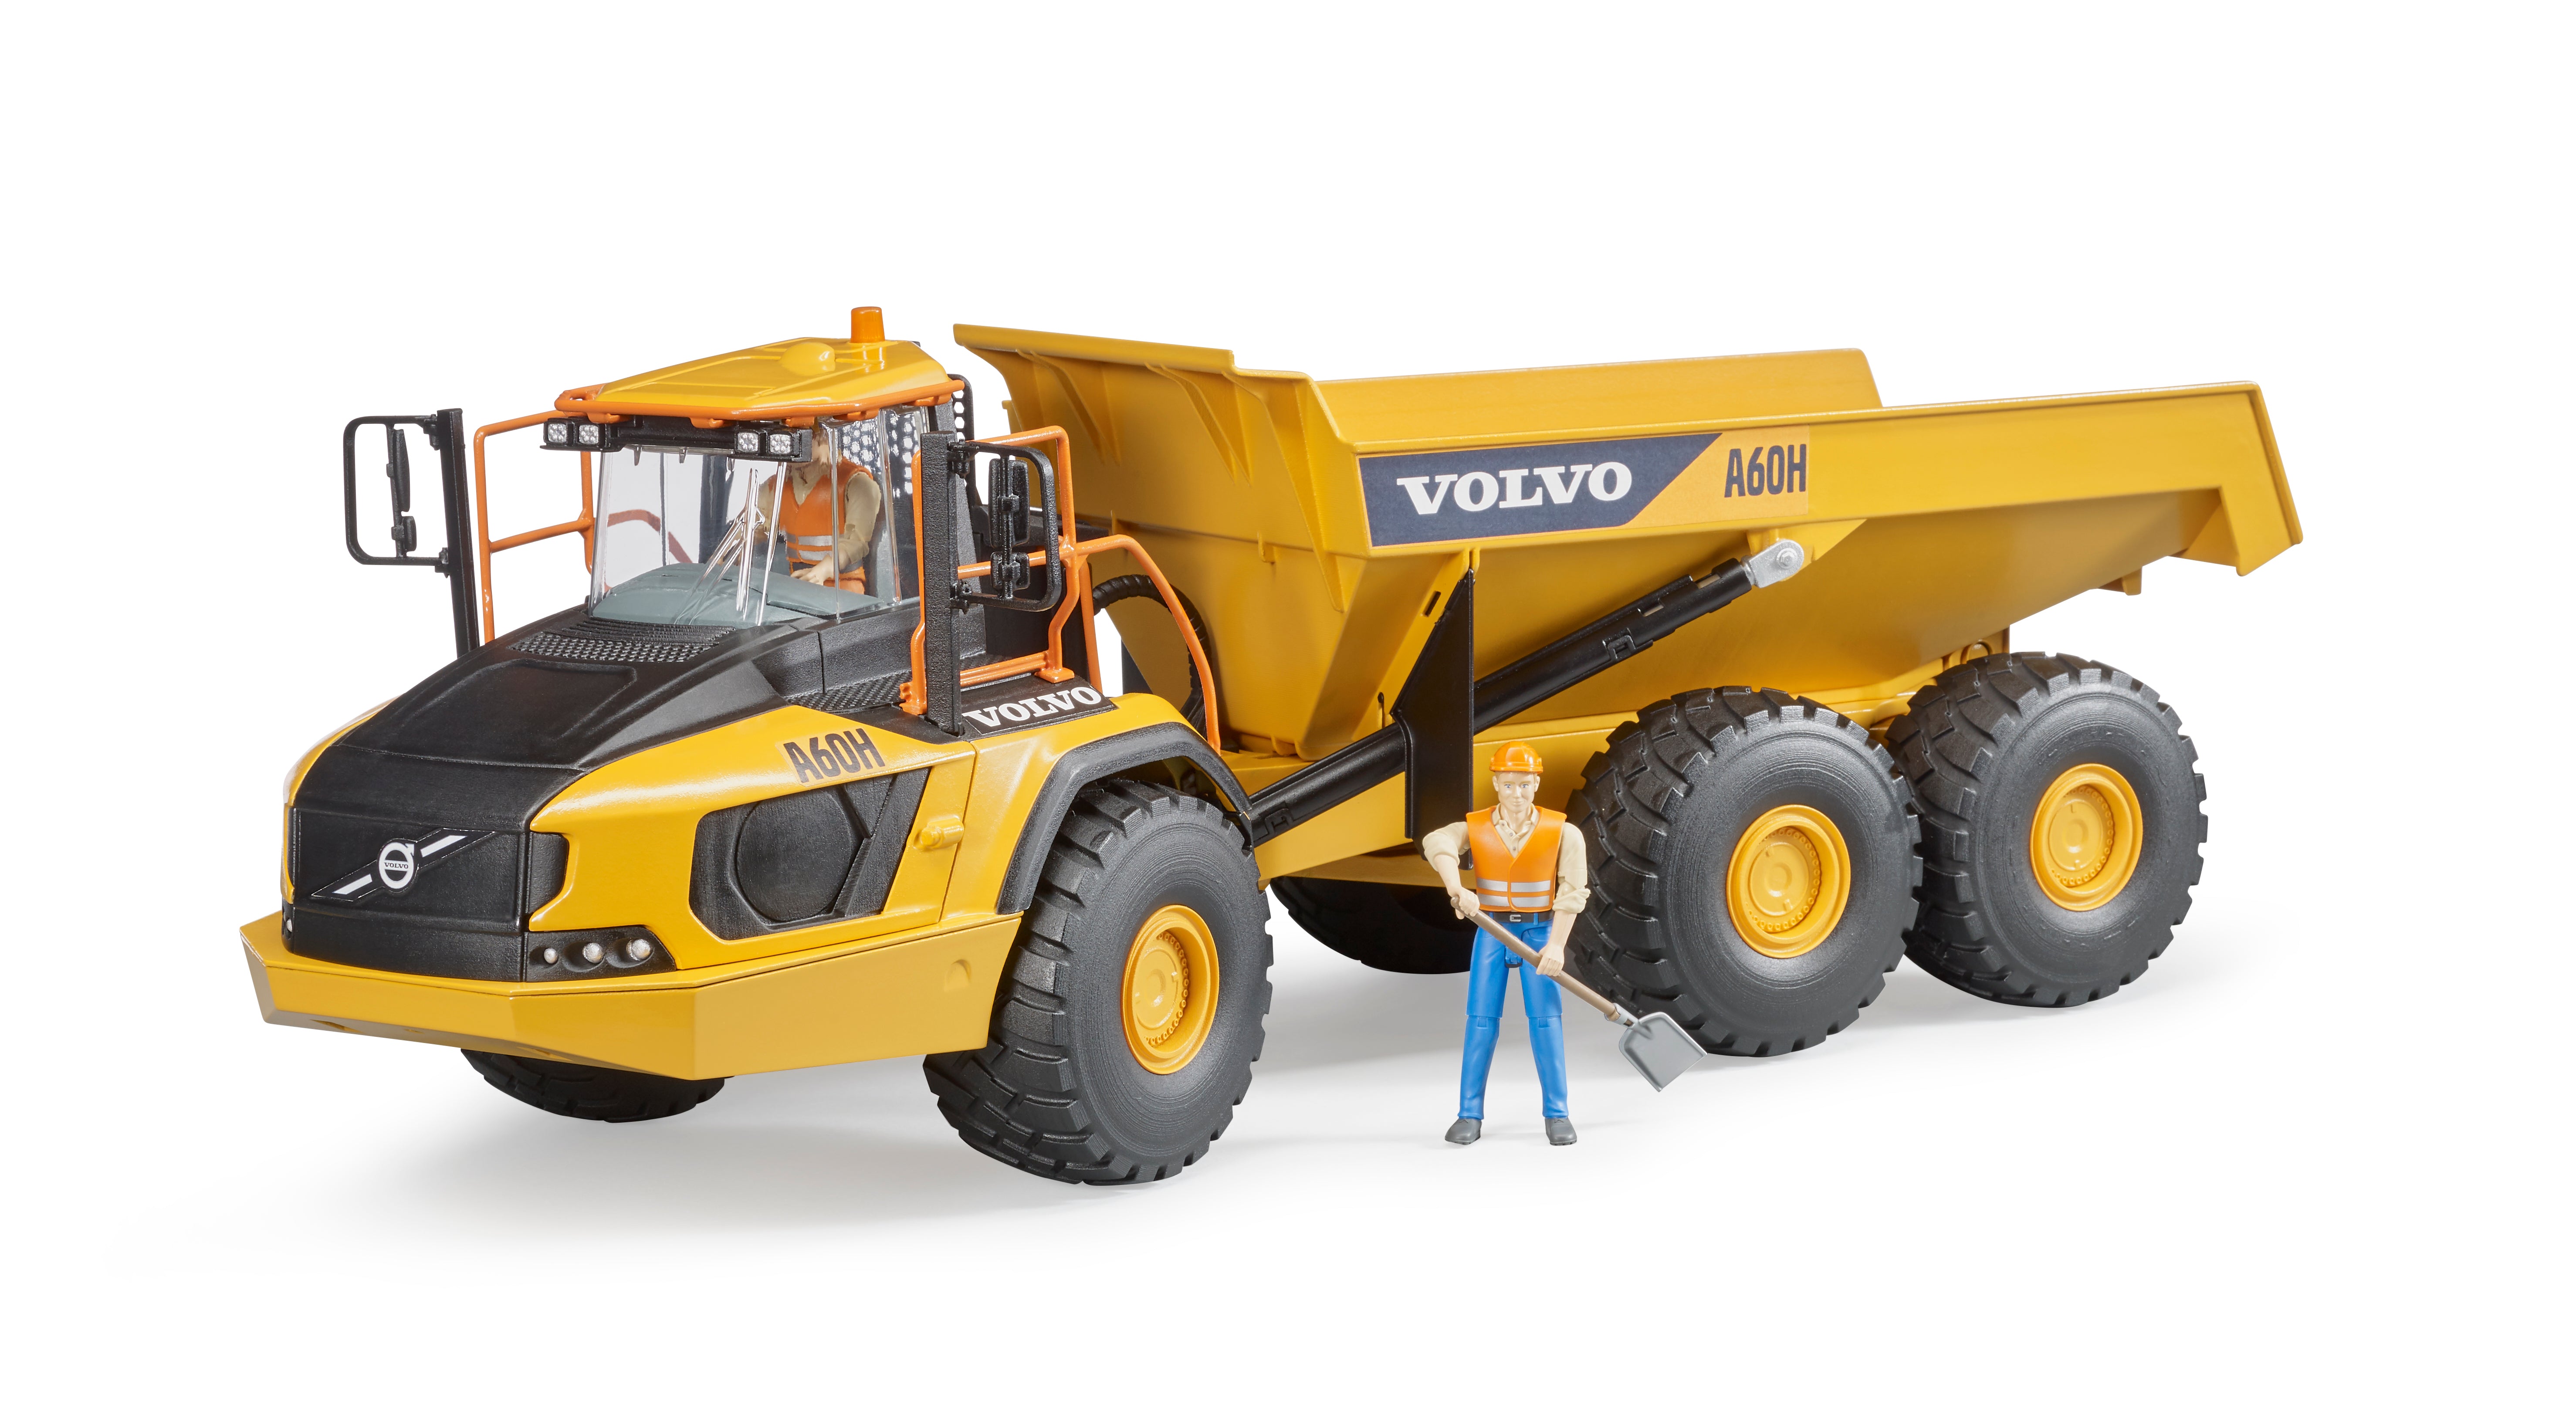 VOLVO Bruder  Articulated Dump Truck A60H - Toy 1:16